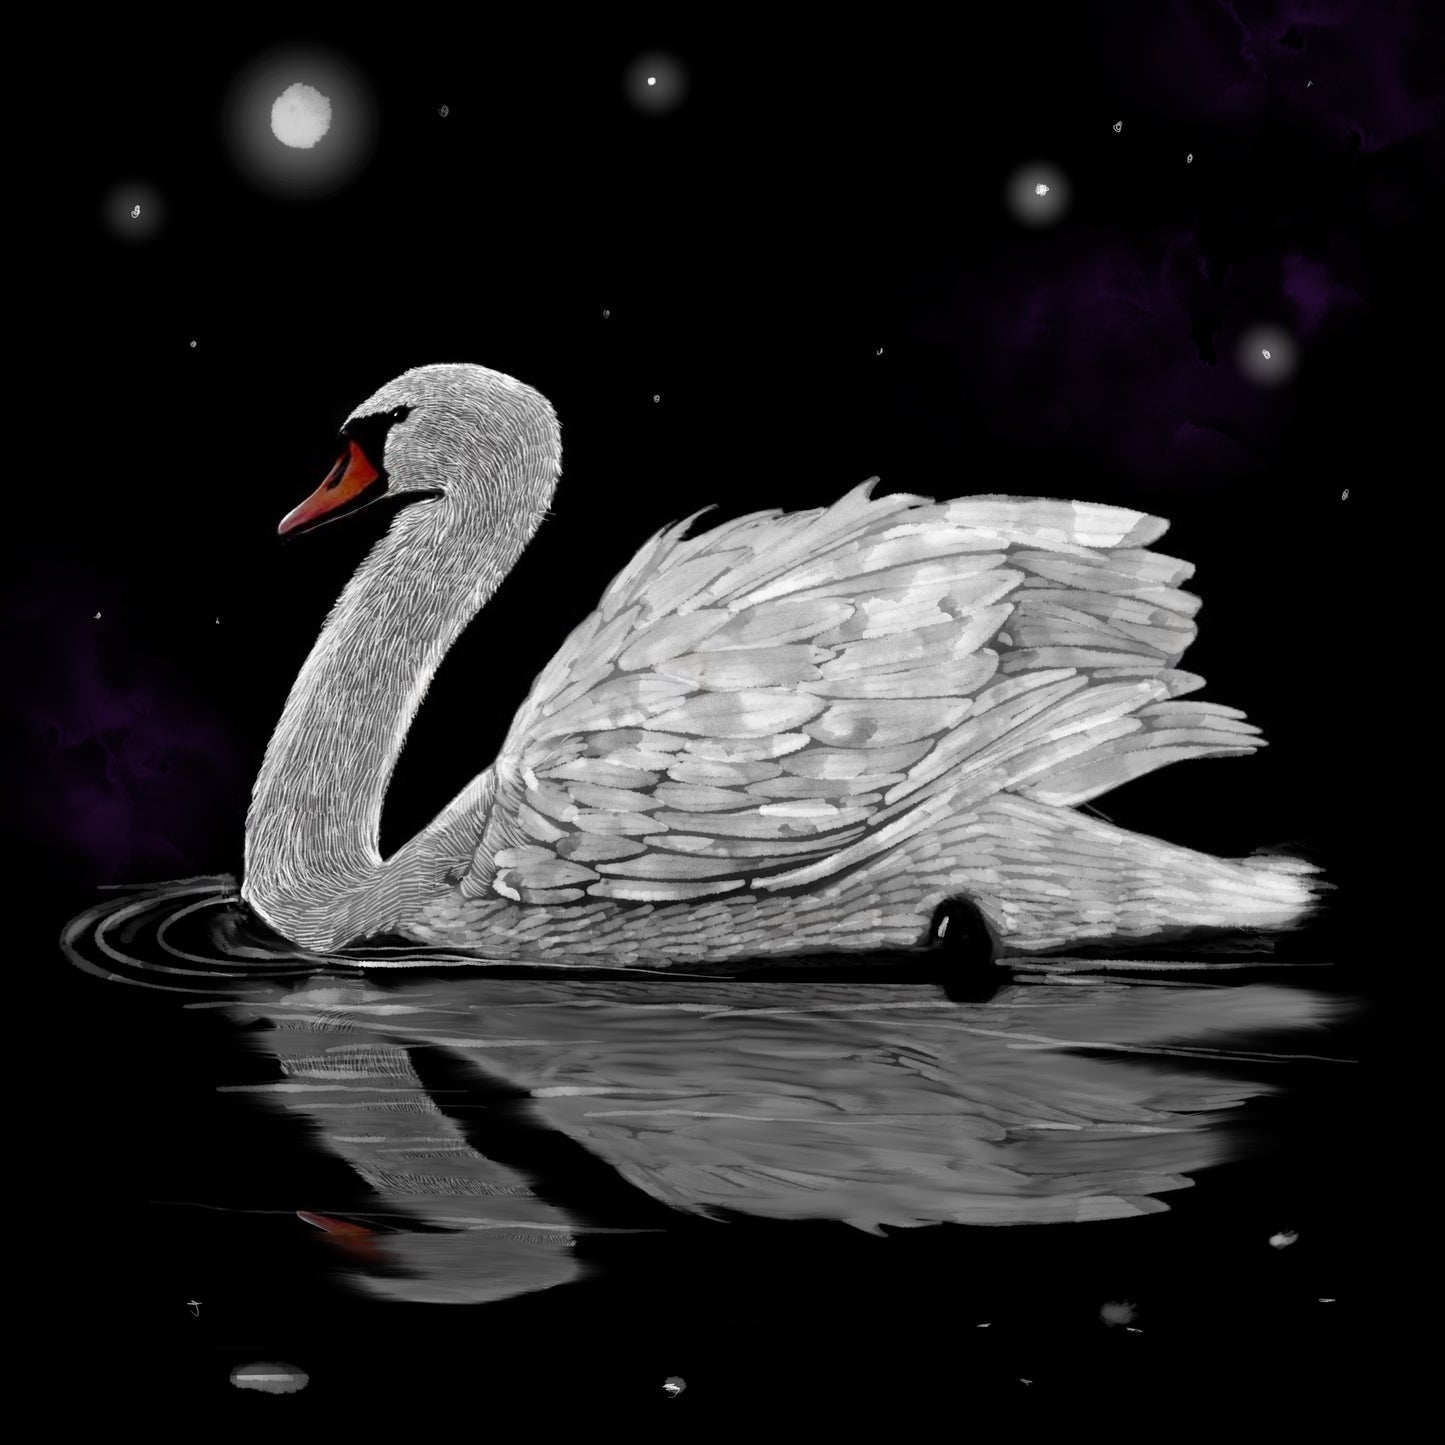 Dark Night White Swan - Illustrated Print by Thomas Little